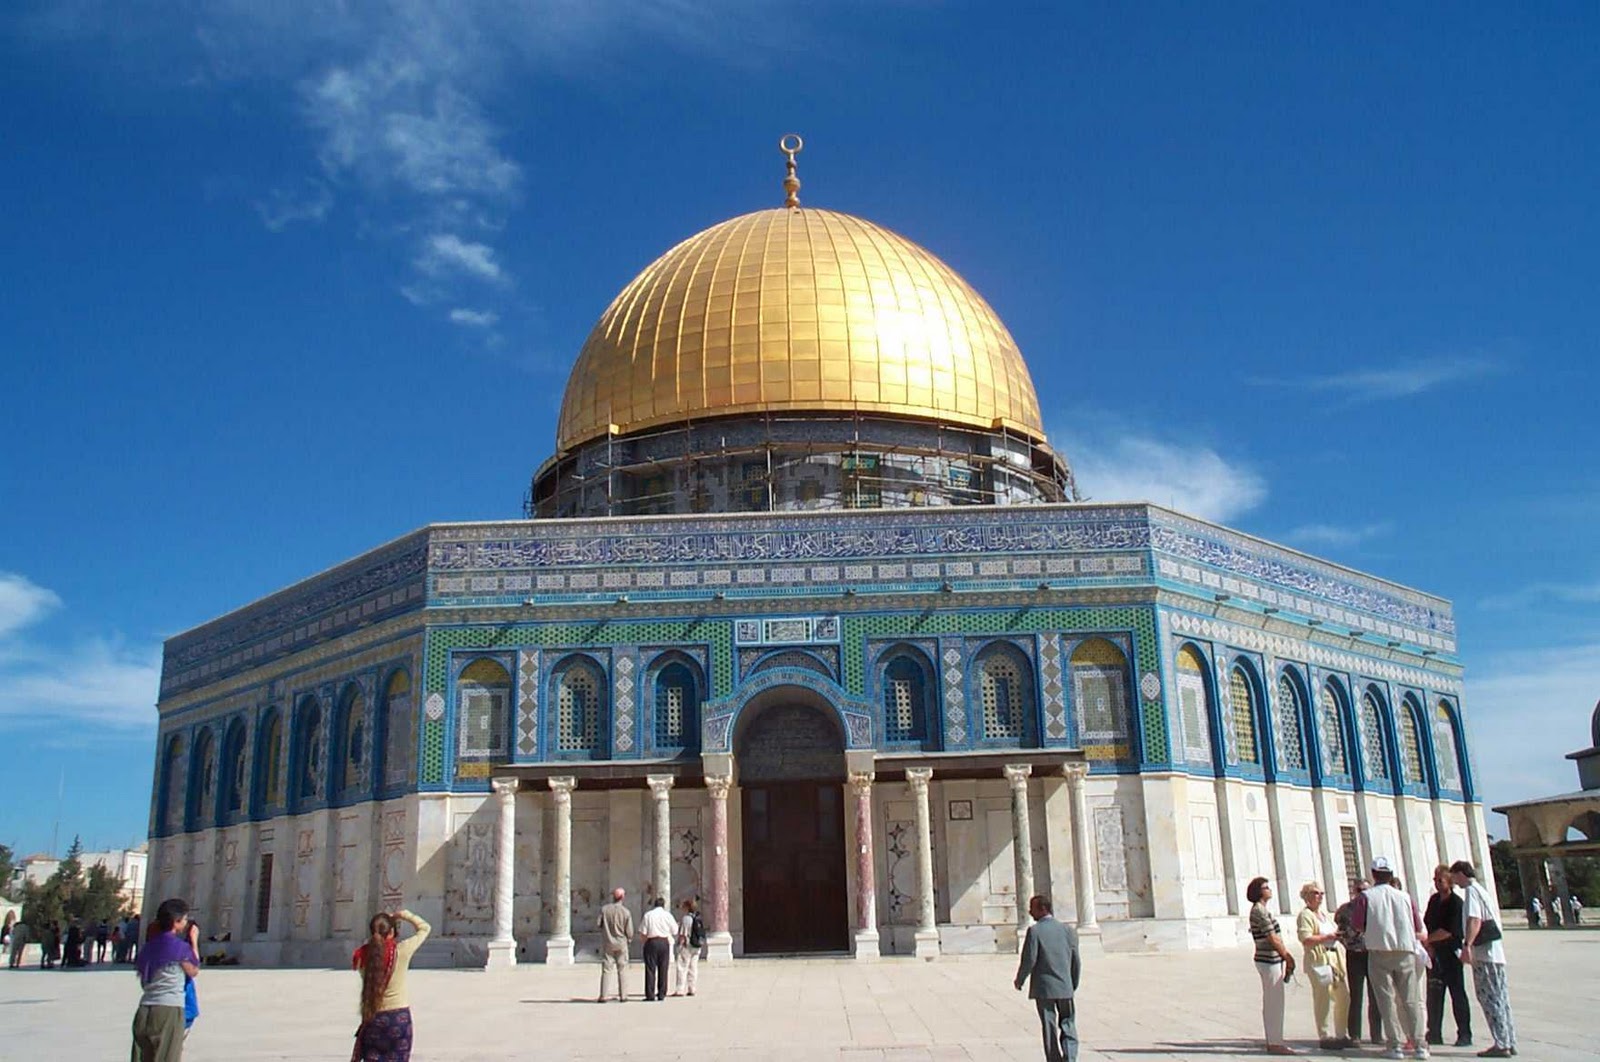 https://blogger.googleusercontent.com/img/b/R29vZ2xl/AVvXsEiGWXGXxJqmsWcMRDPi_dZDLnLbhUZ7oHvZ5vkDKAJNfefwejUid8XosMCQdv8E2ZIfSCqnn6fg1iOlwhnjyiHzF5JpxZ1JilUuC6Sns3mmUacOajuqLNRqec3CuAm2BaABIKIU_v_0ciFJ/s1600/Masjid-al-Aqsa+%25283%2529.jpg